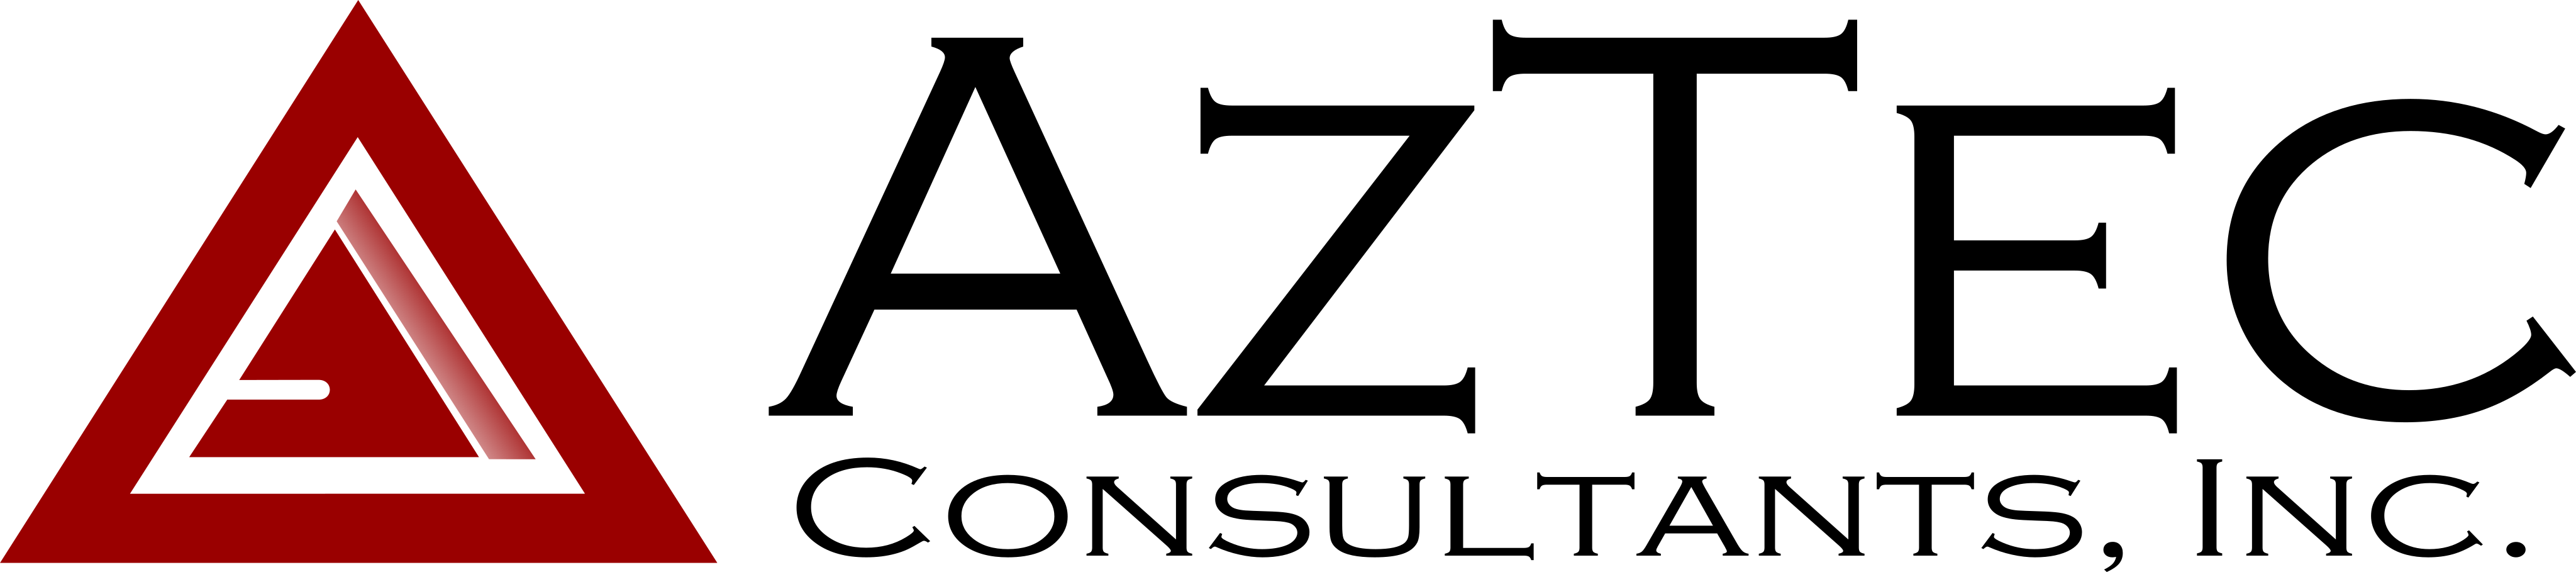 AzTec Consultants logo